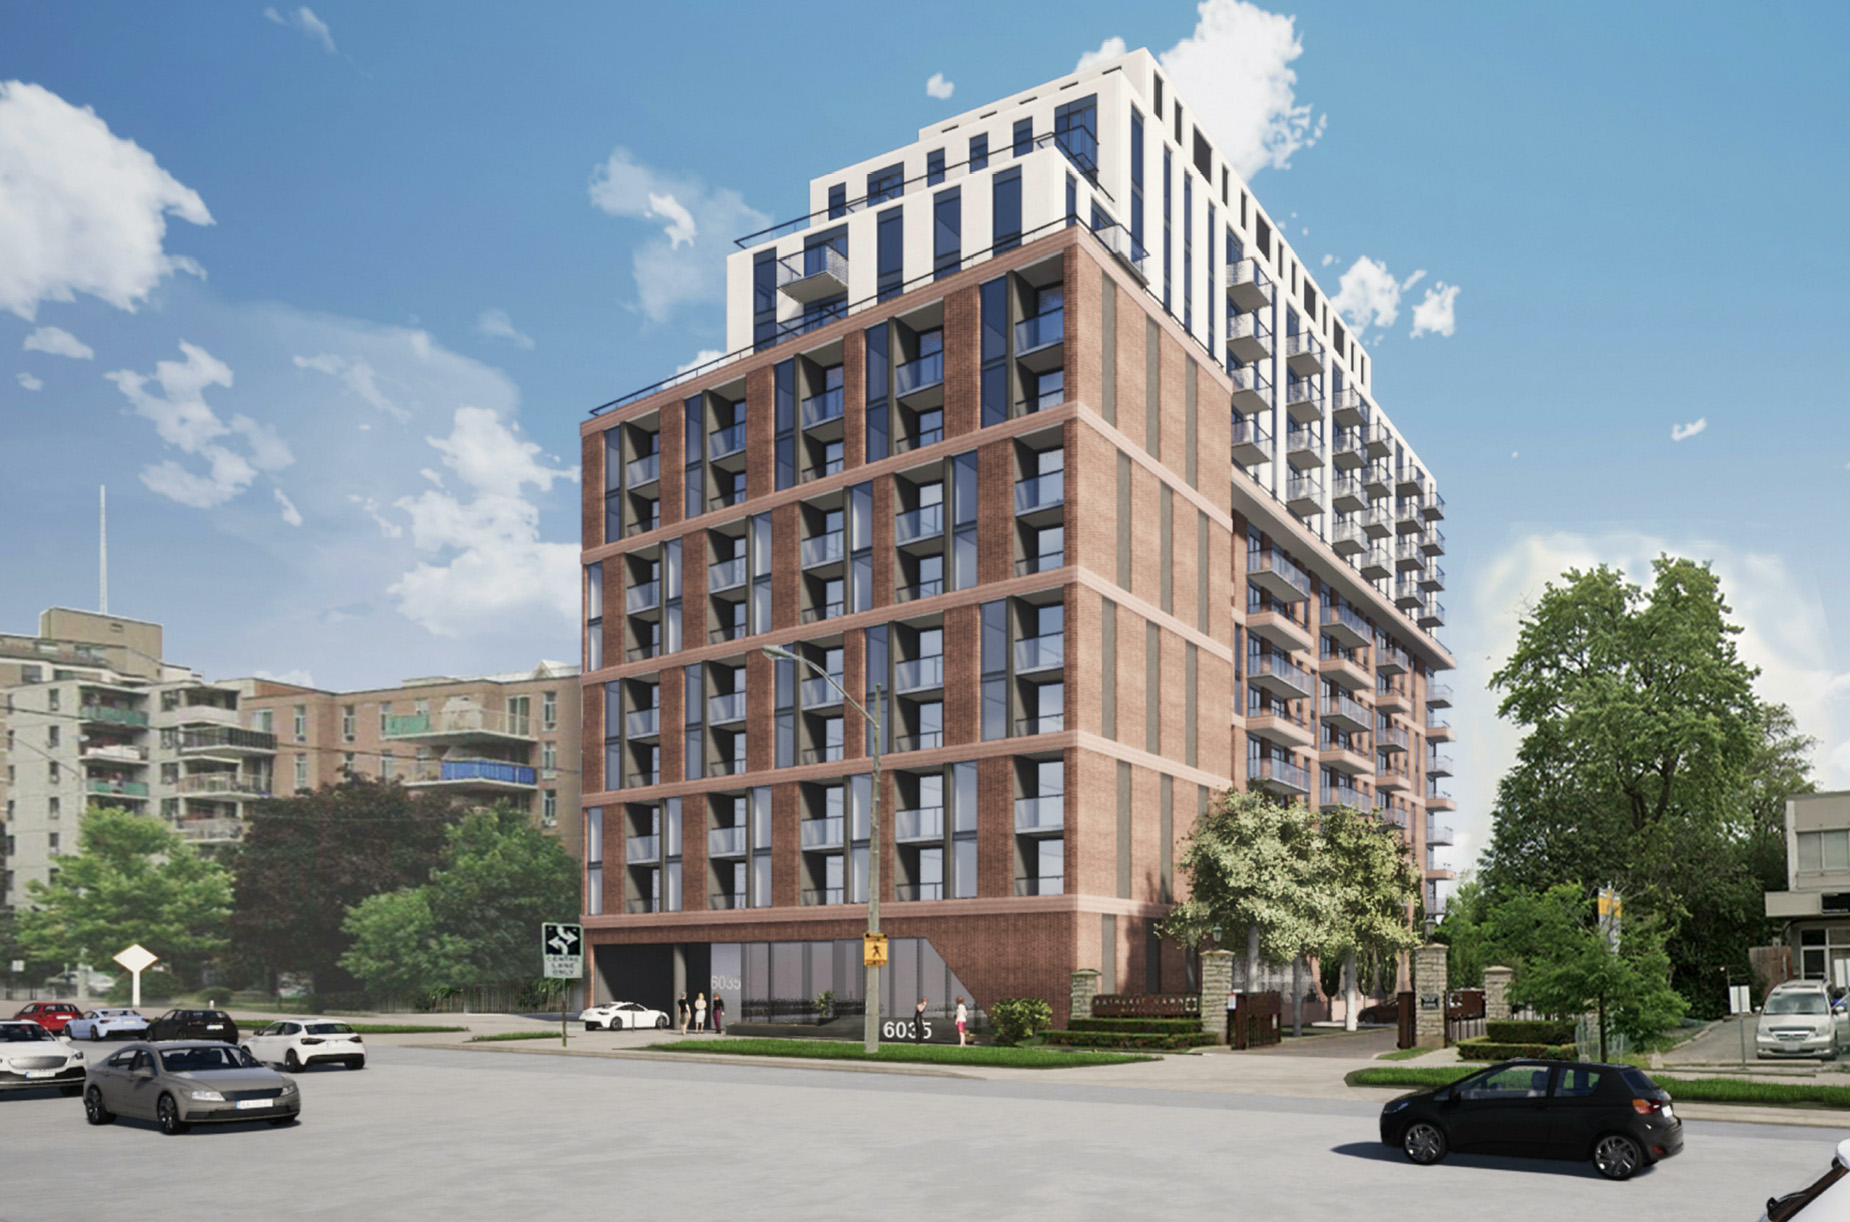 6035 Bathurst Avenue, Toronto, designed by BDP Quadrangle Limited for Plaza Partners